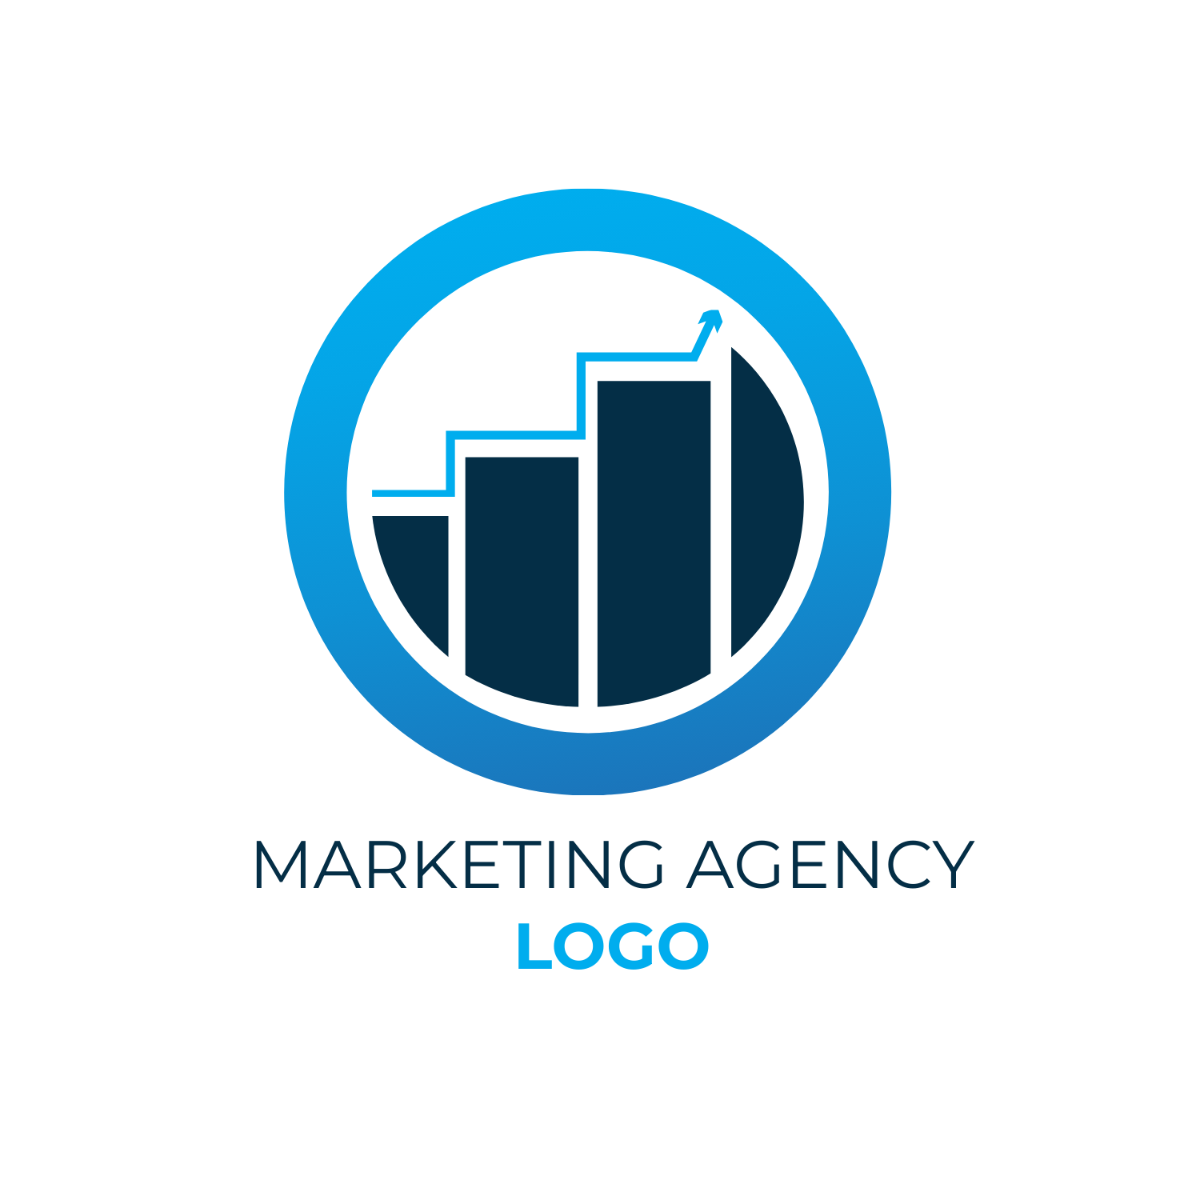 Free Marketing Agency Logo Template